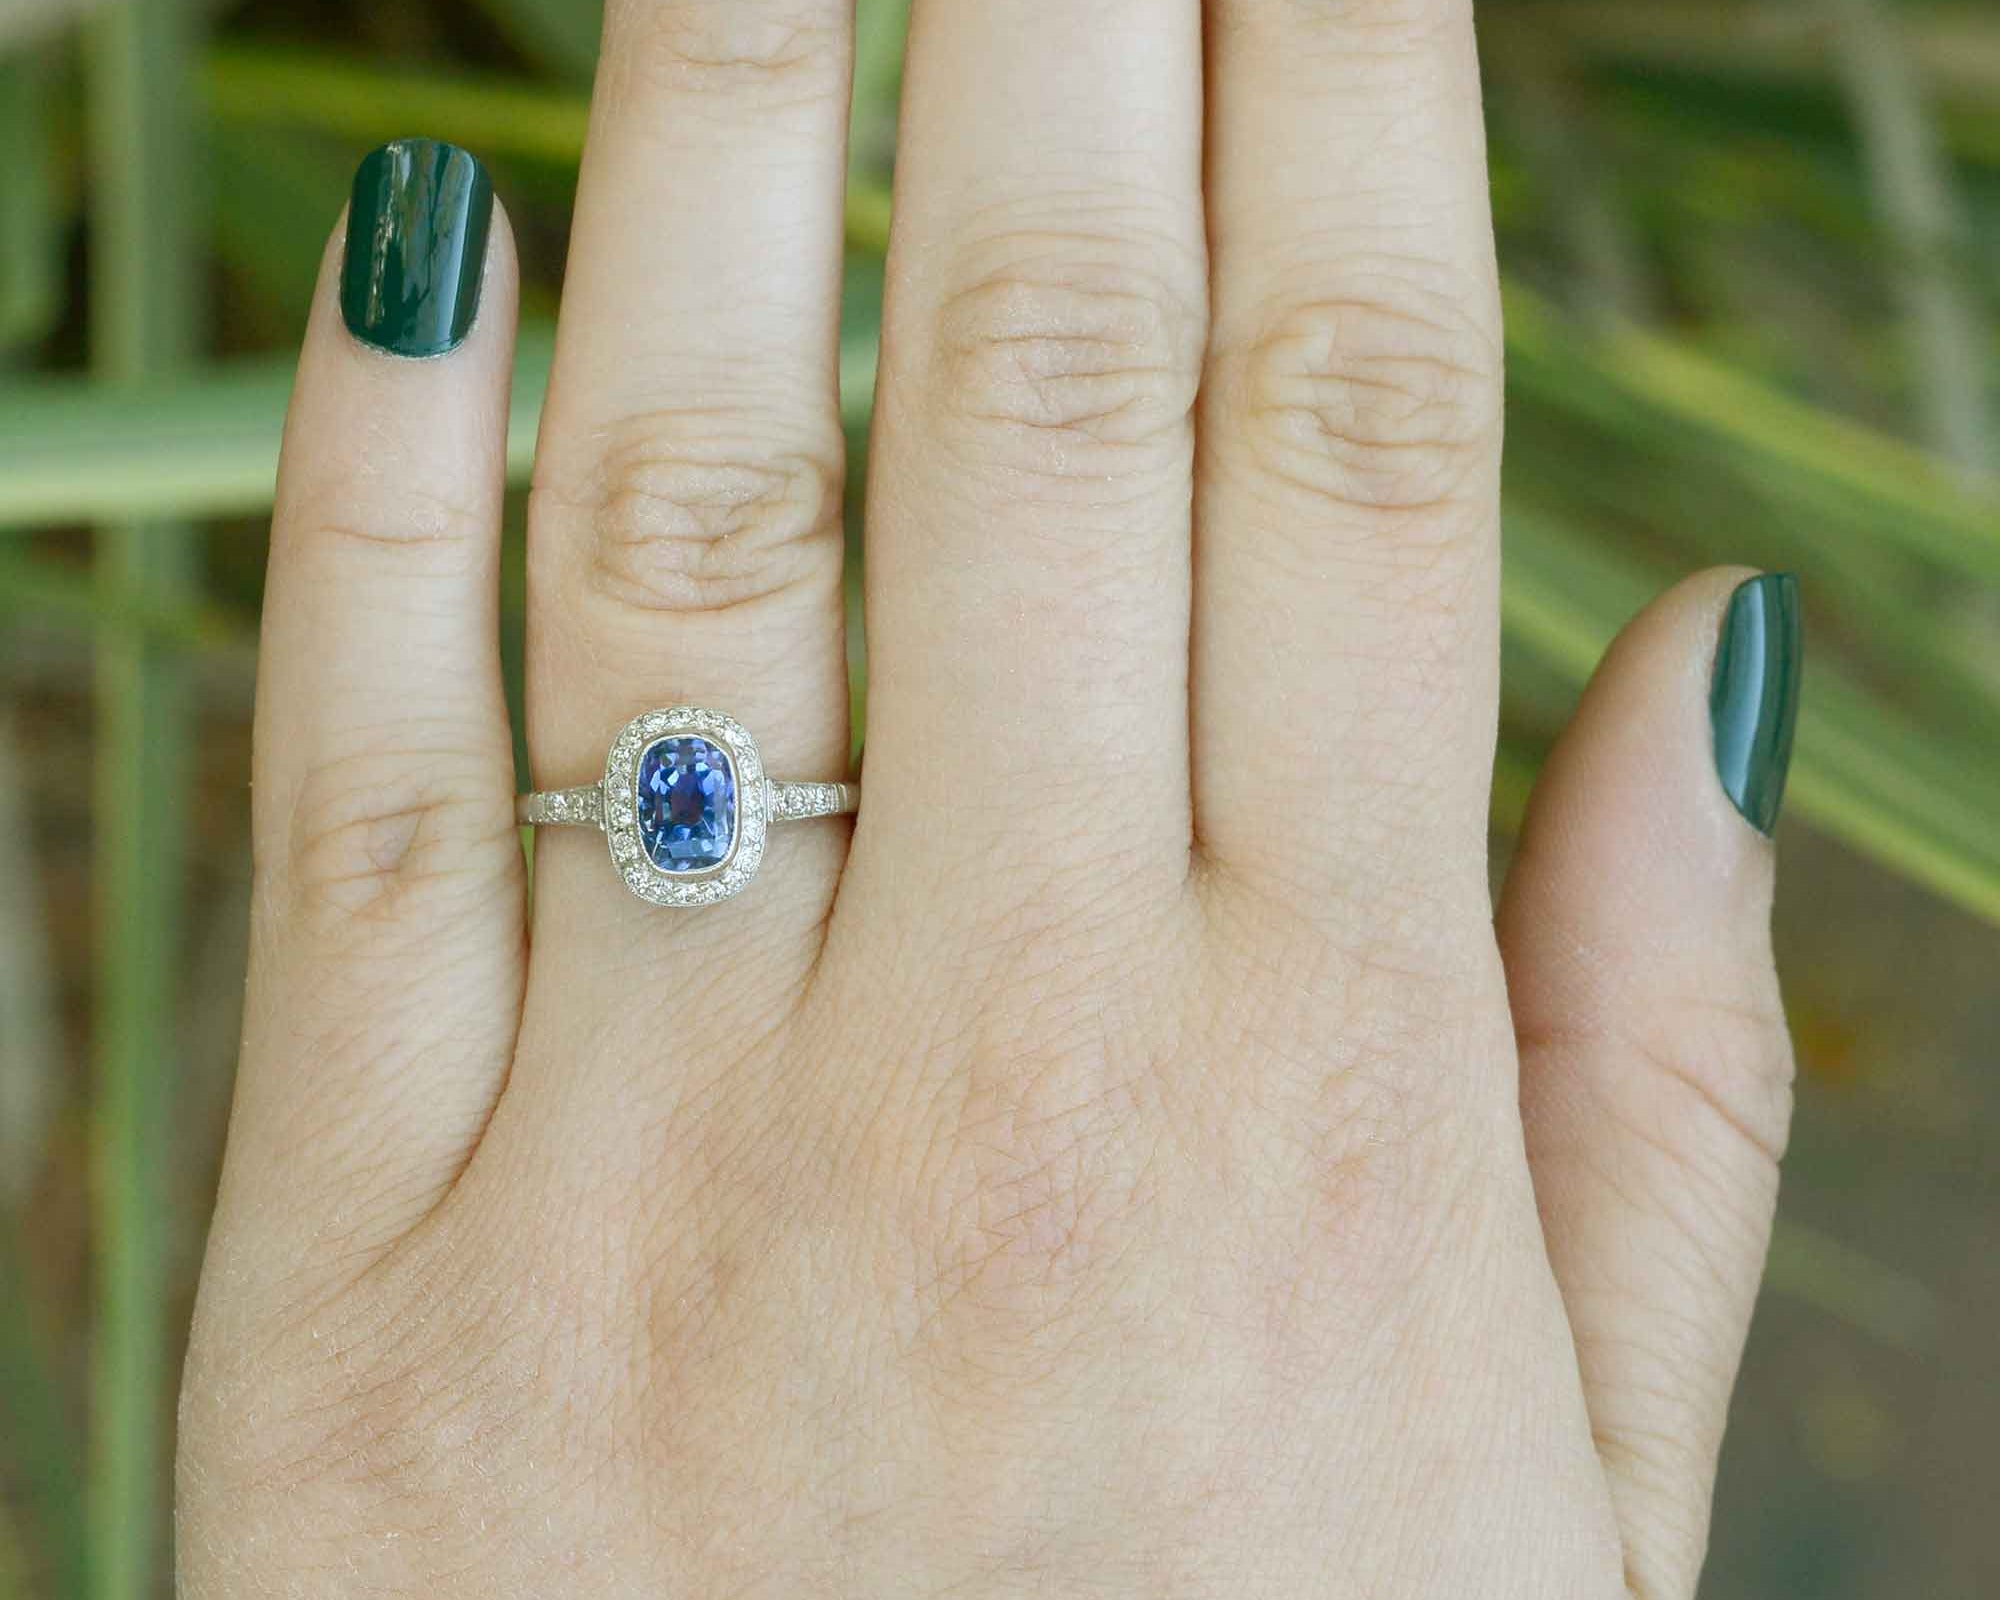 This three carat sapphire displays vivid cornflower blue color.